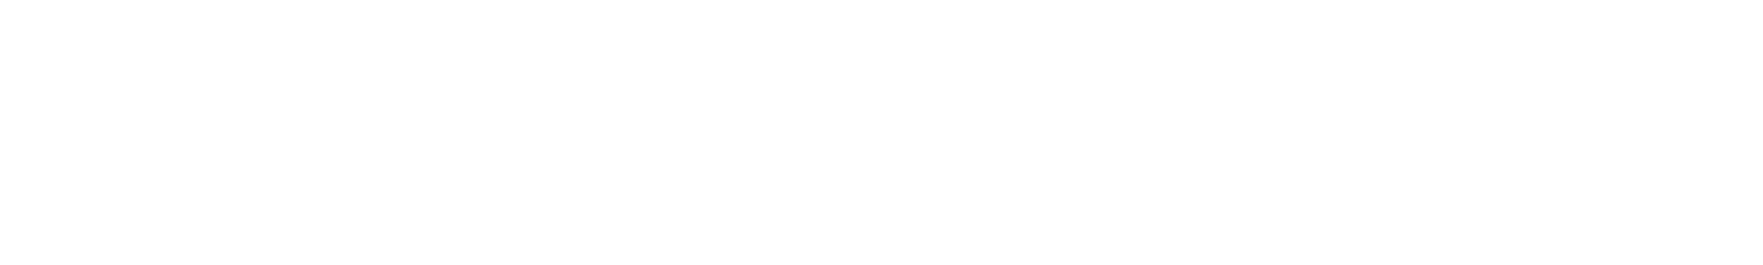 Press Washington Post logo